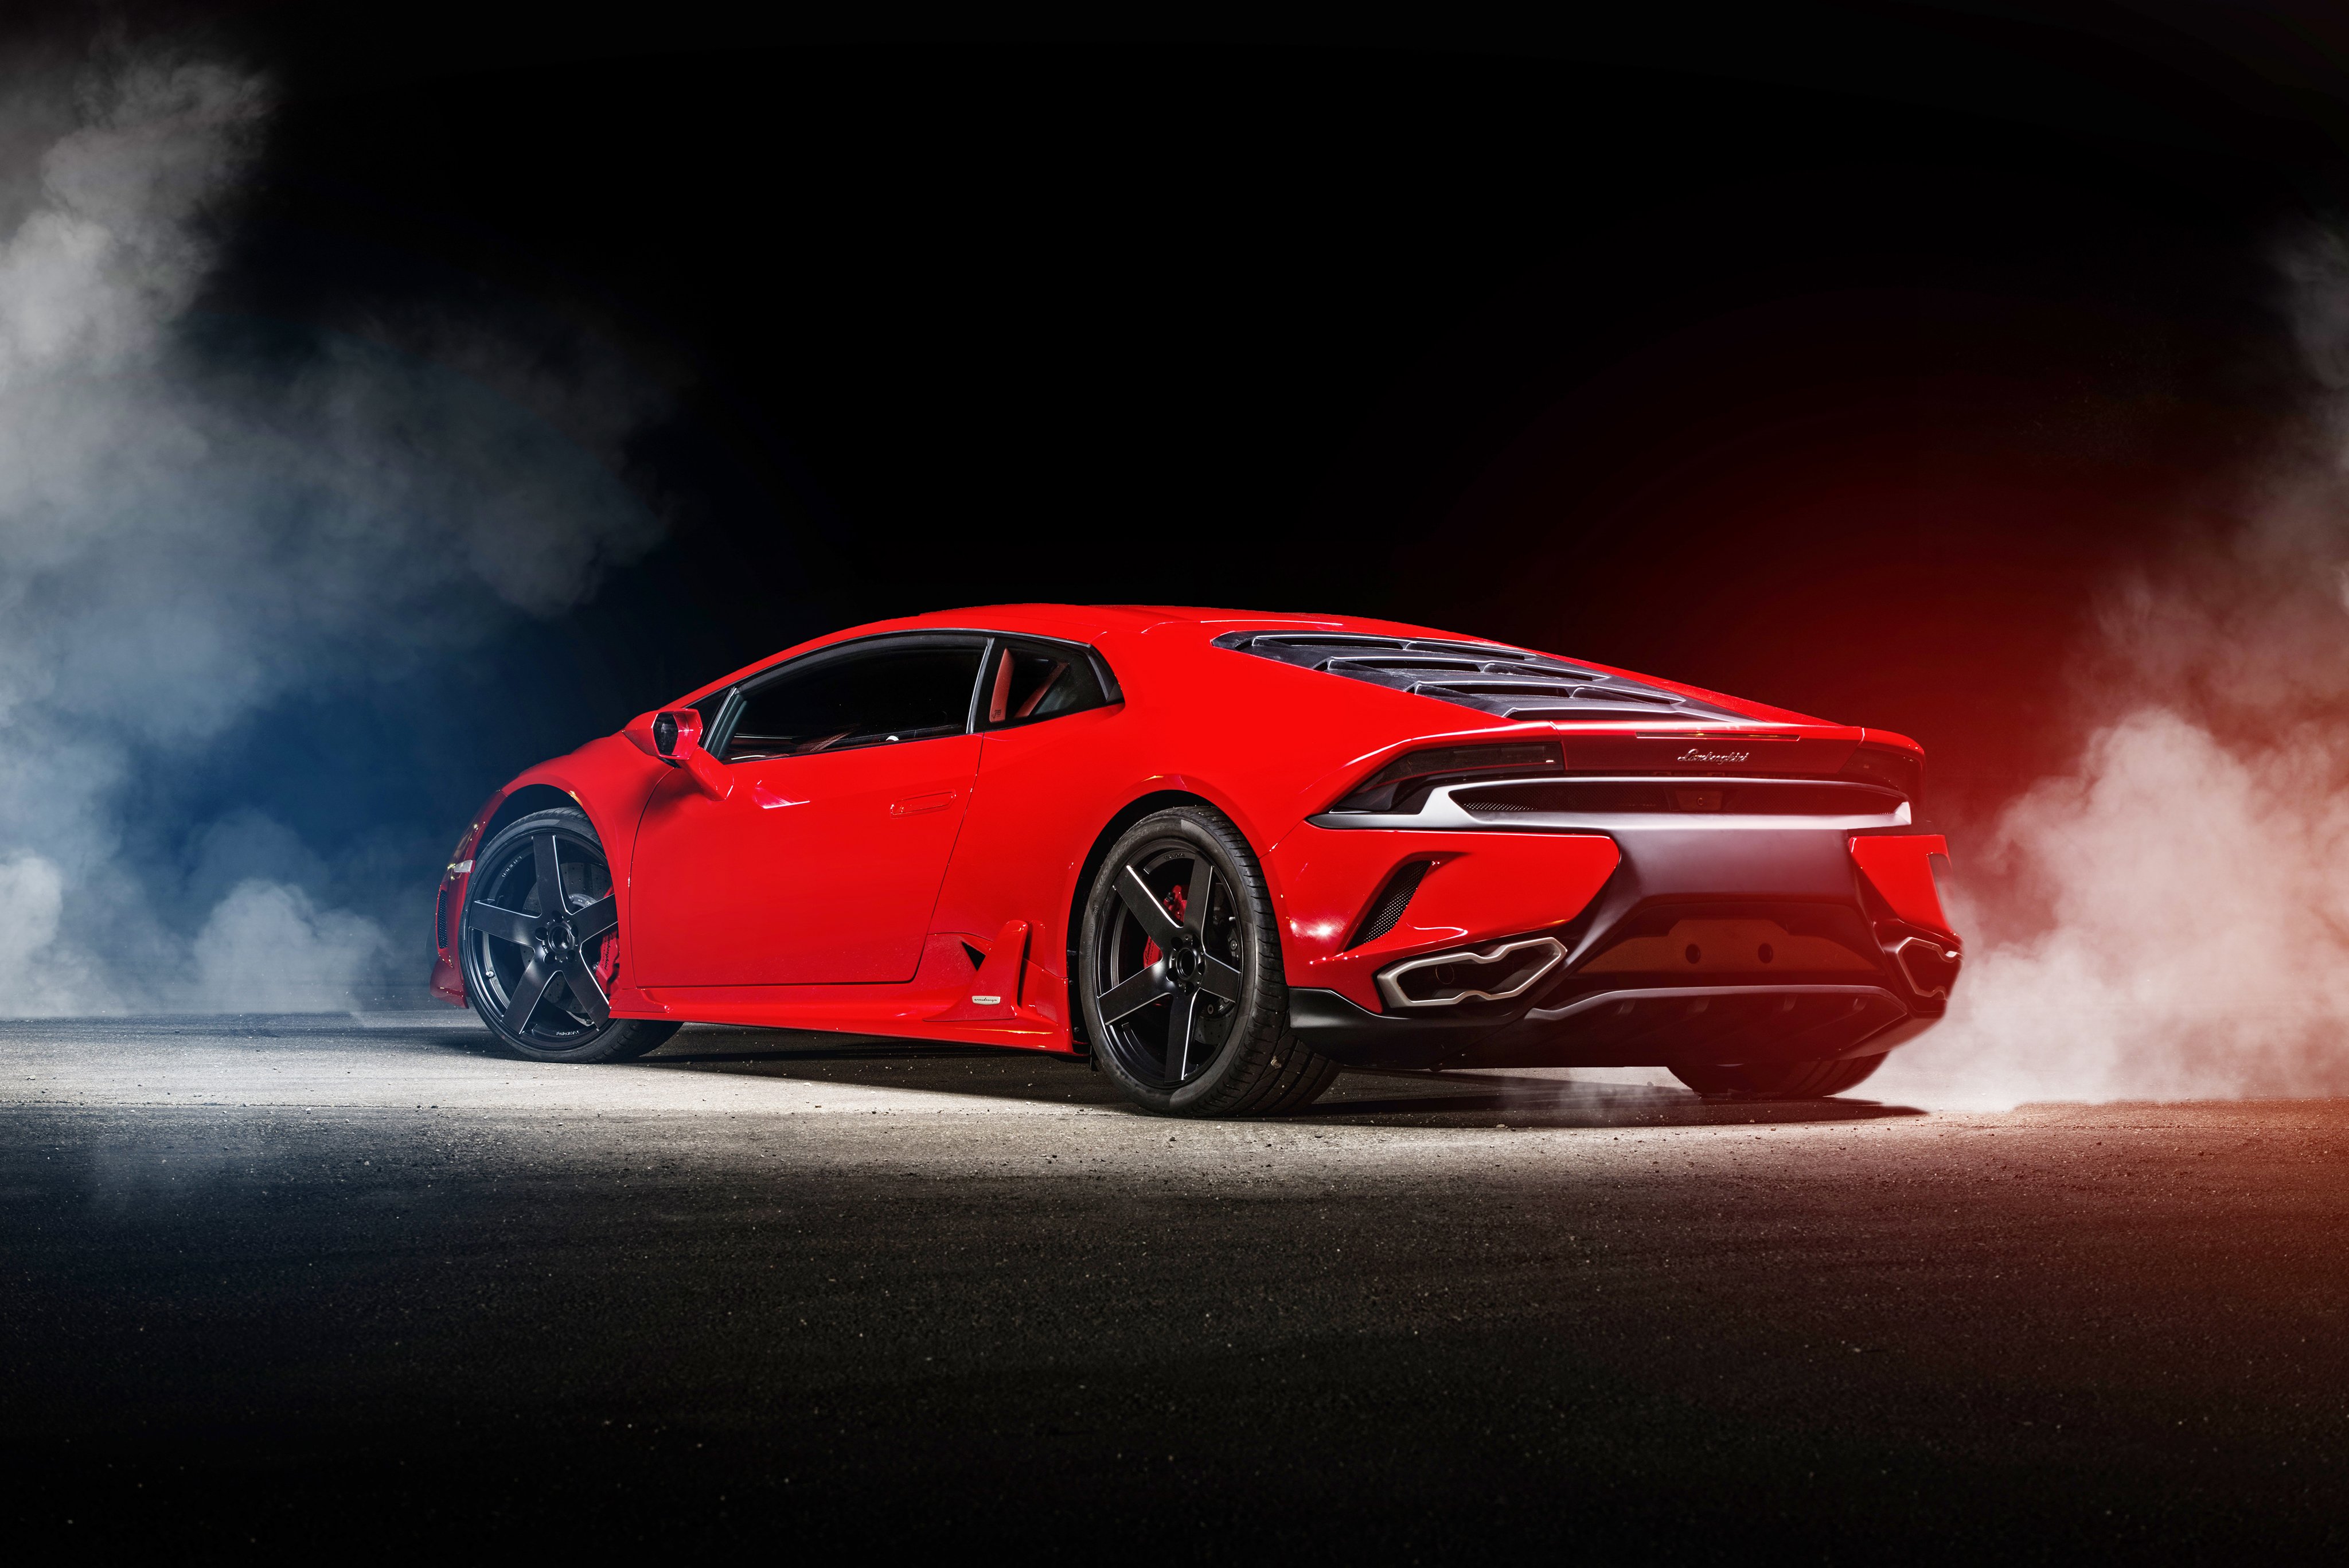 2015, Ares design, Lamborghini, Huracan, Lb724, Supercar Wallpaper